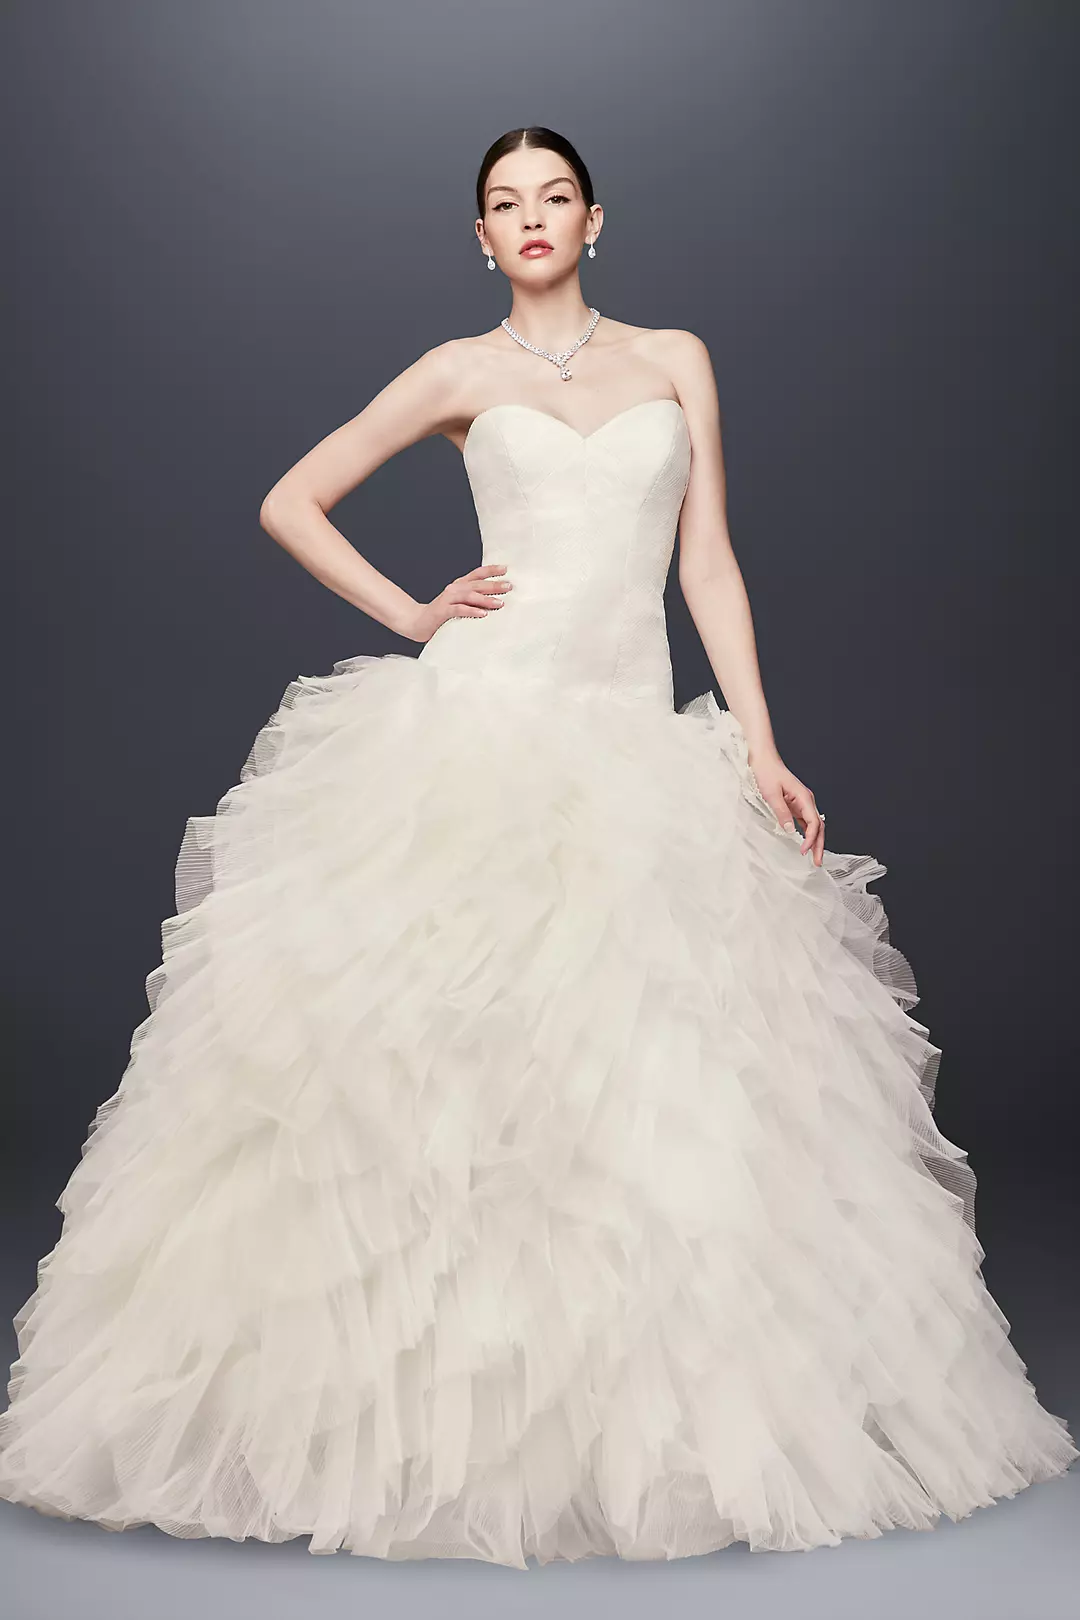 As-Is Drop-Waist Tulle Wedding Dress Image